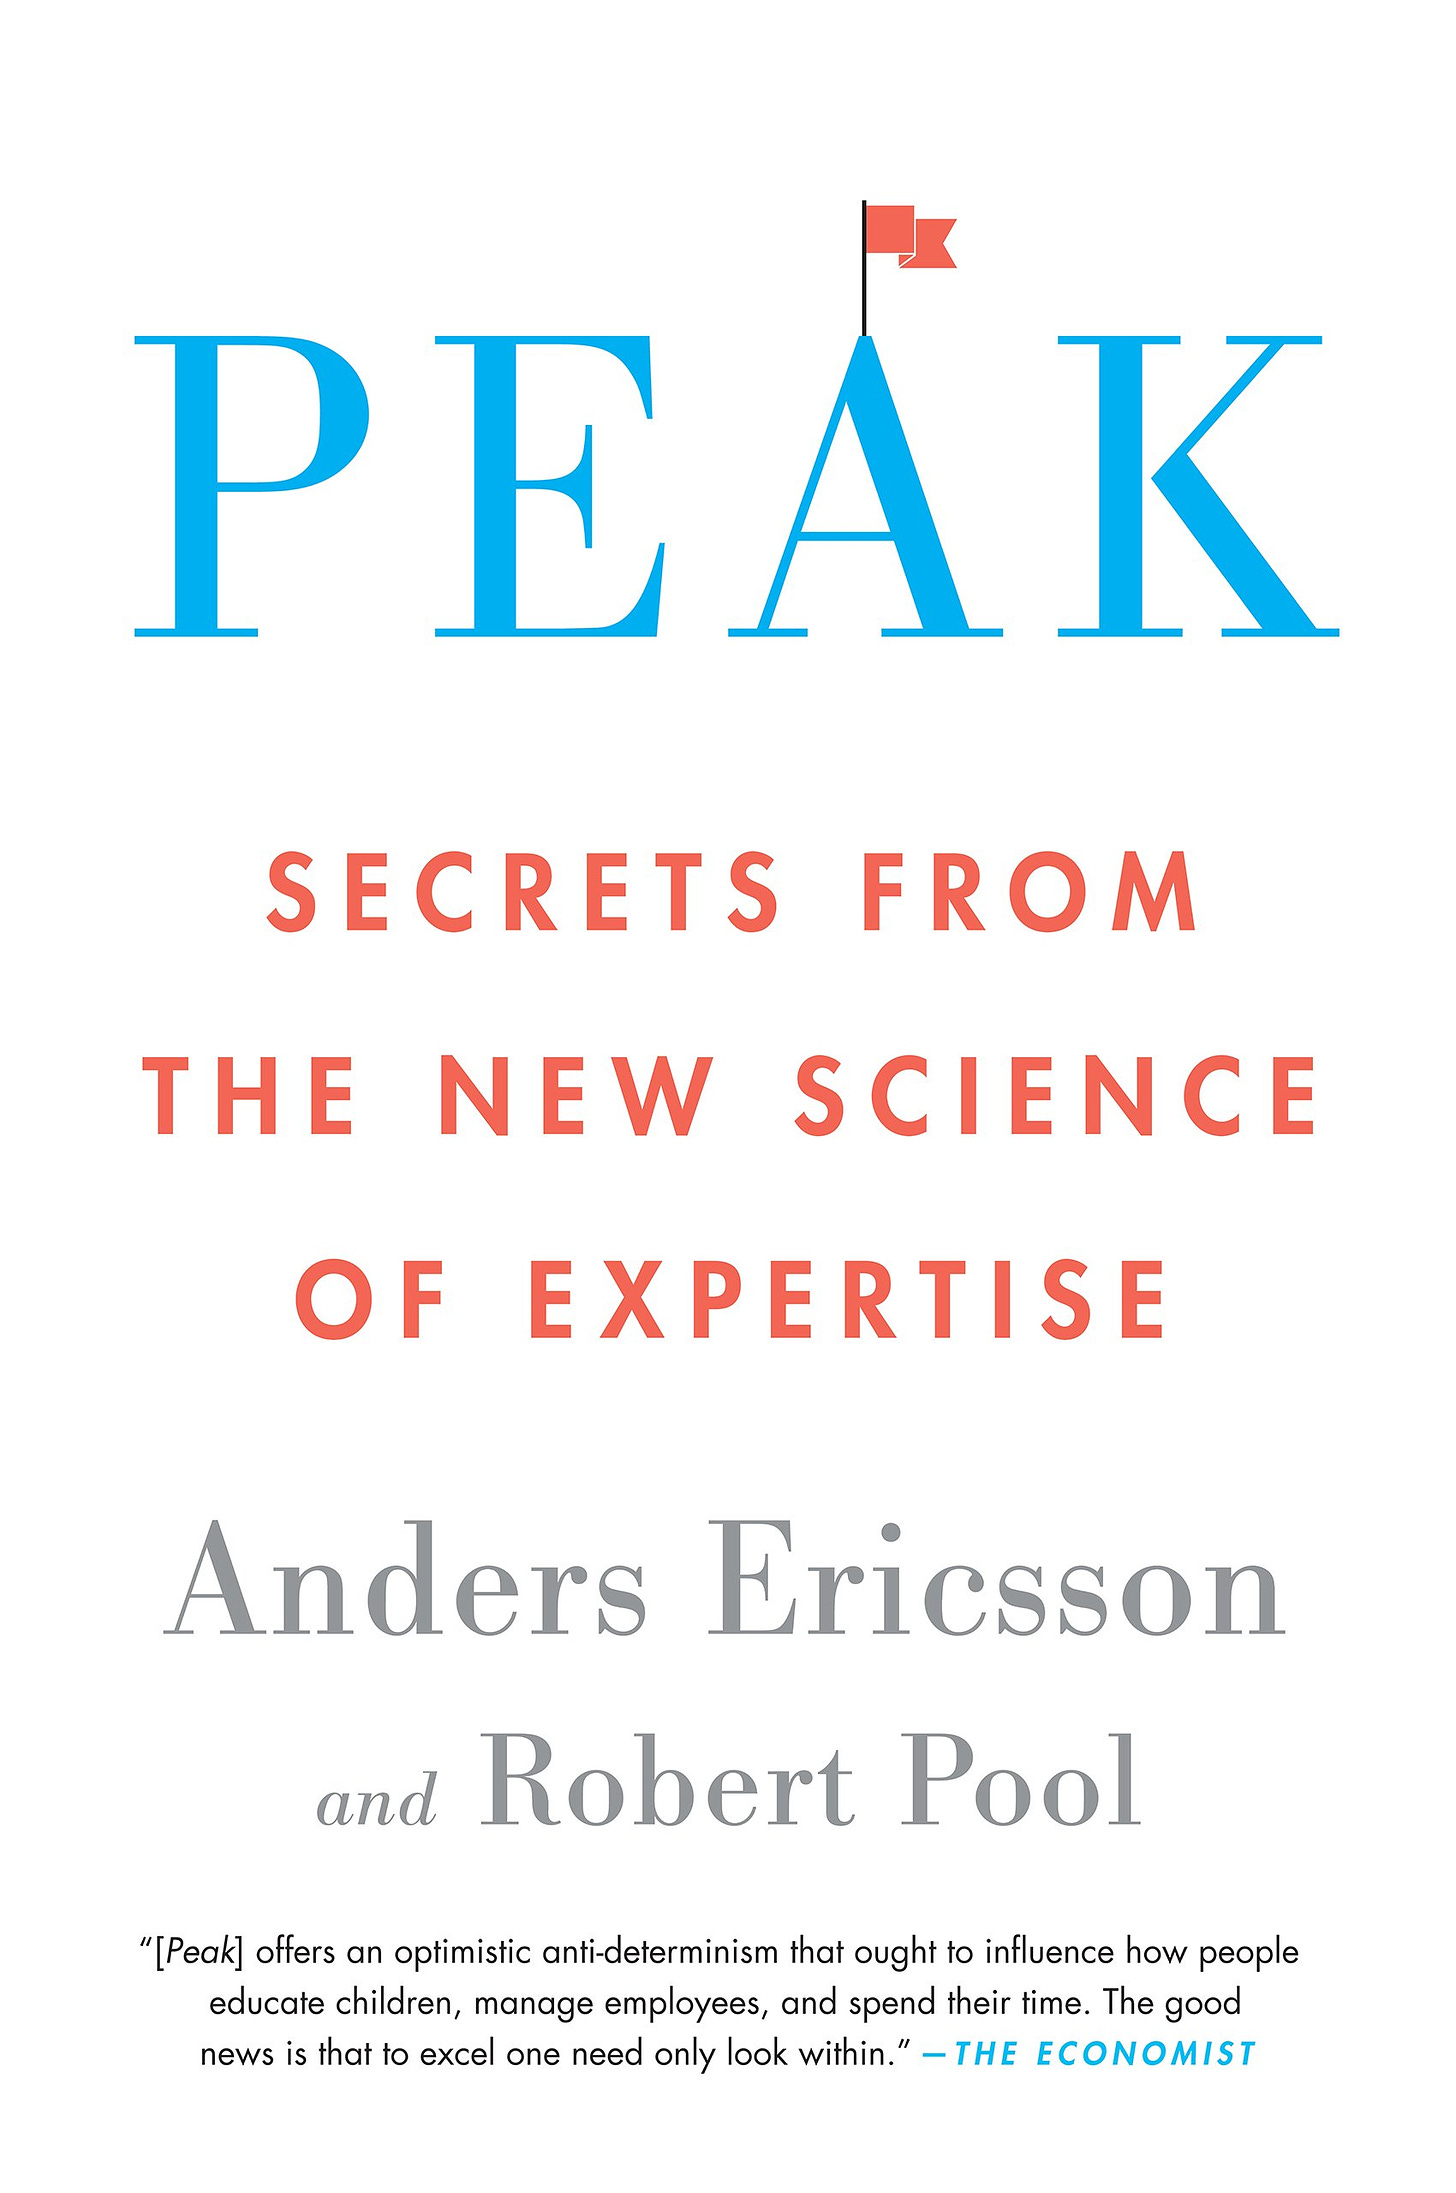 Amazon.it: Anders Ericsson: books, biography, latest update